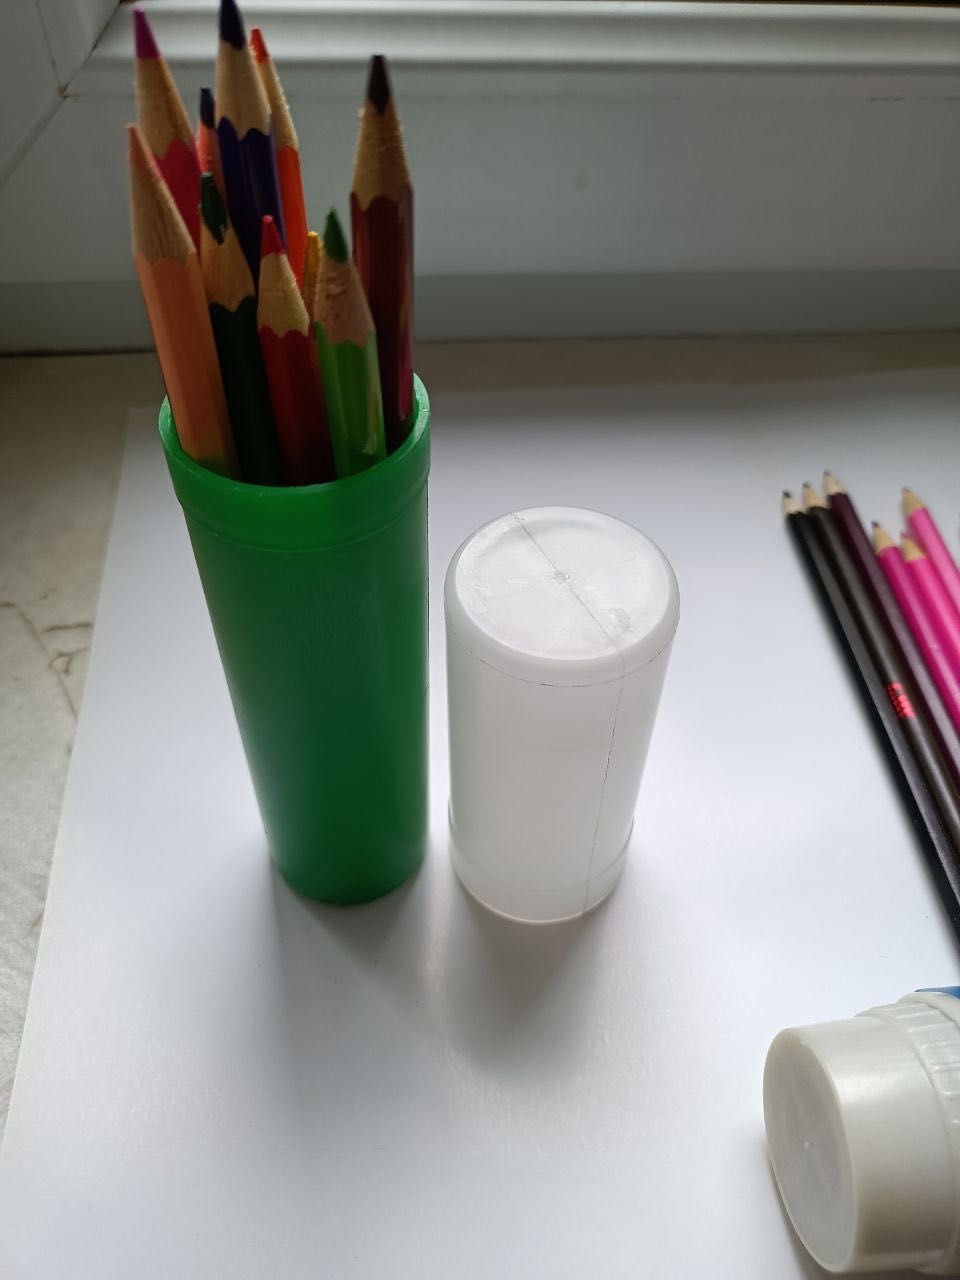 Пенал в виде карандаша + цветный карандаши